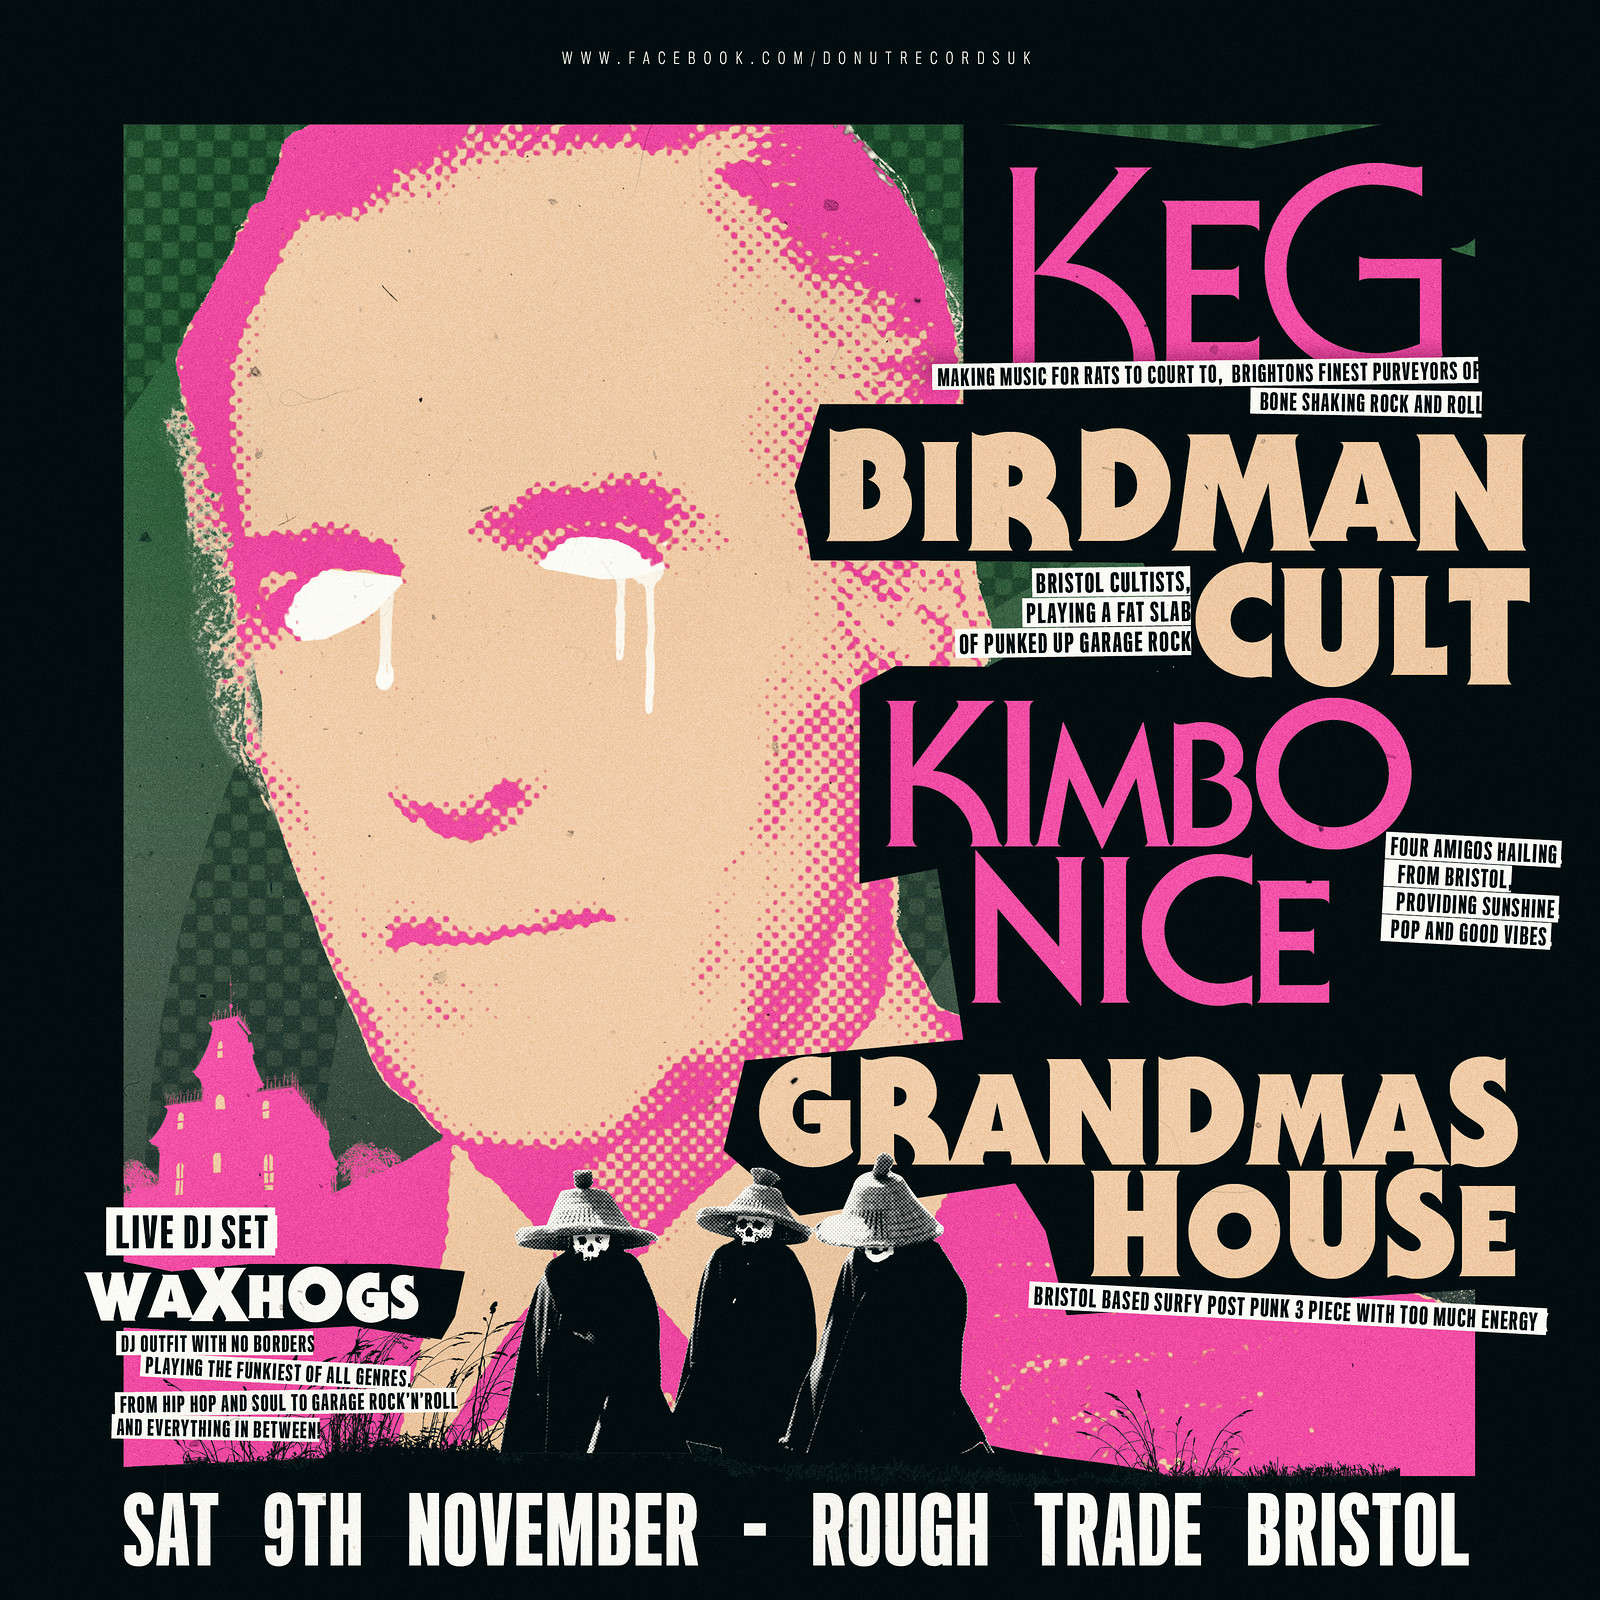 KEG / Birdman Cult / Kimbo Nice / Grandmas House at Rough Trade Bristol